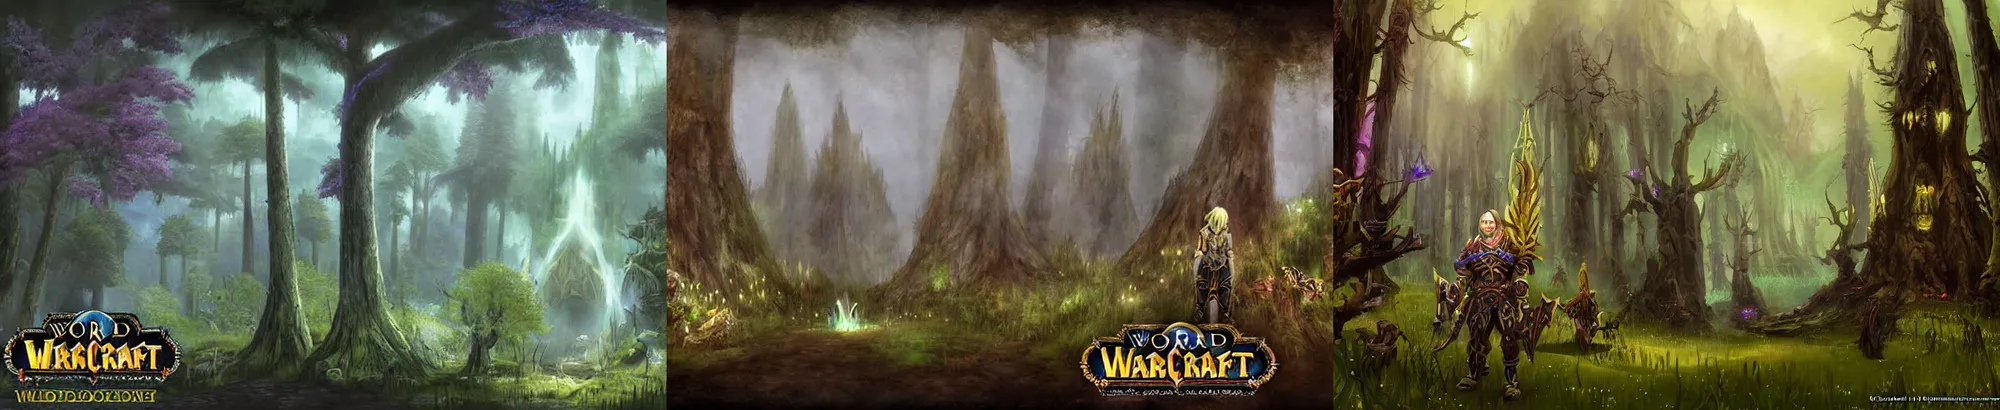 Prompt: brian jones inside world of warcraft elwynn forest